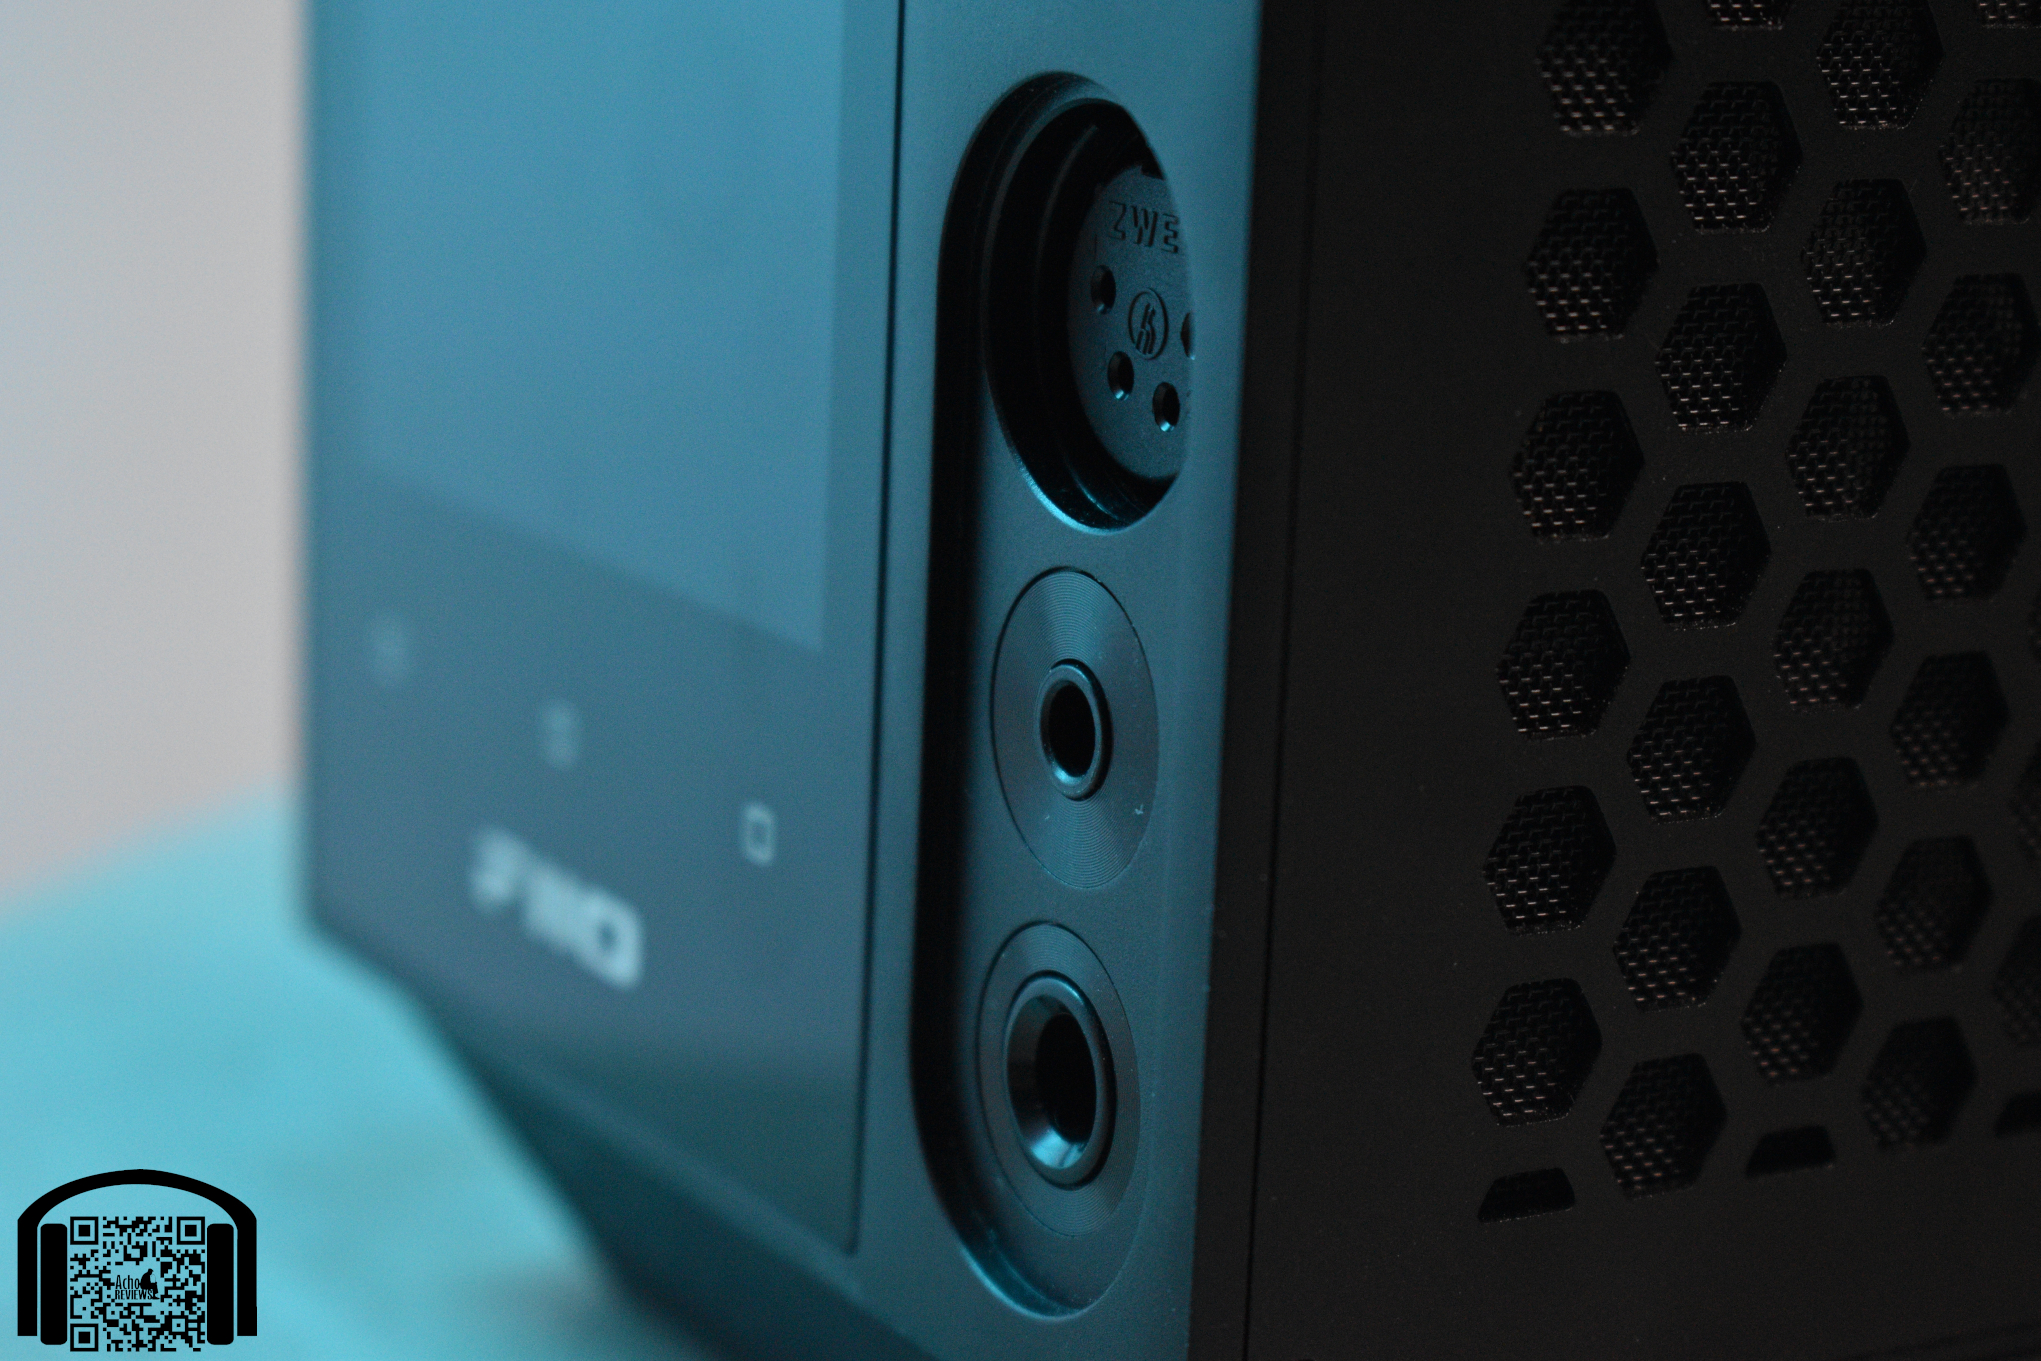 FiiO - R7 All-in-One Player, Streamer, and Headphone Amp/DAC